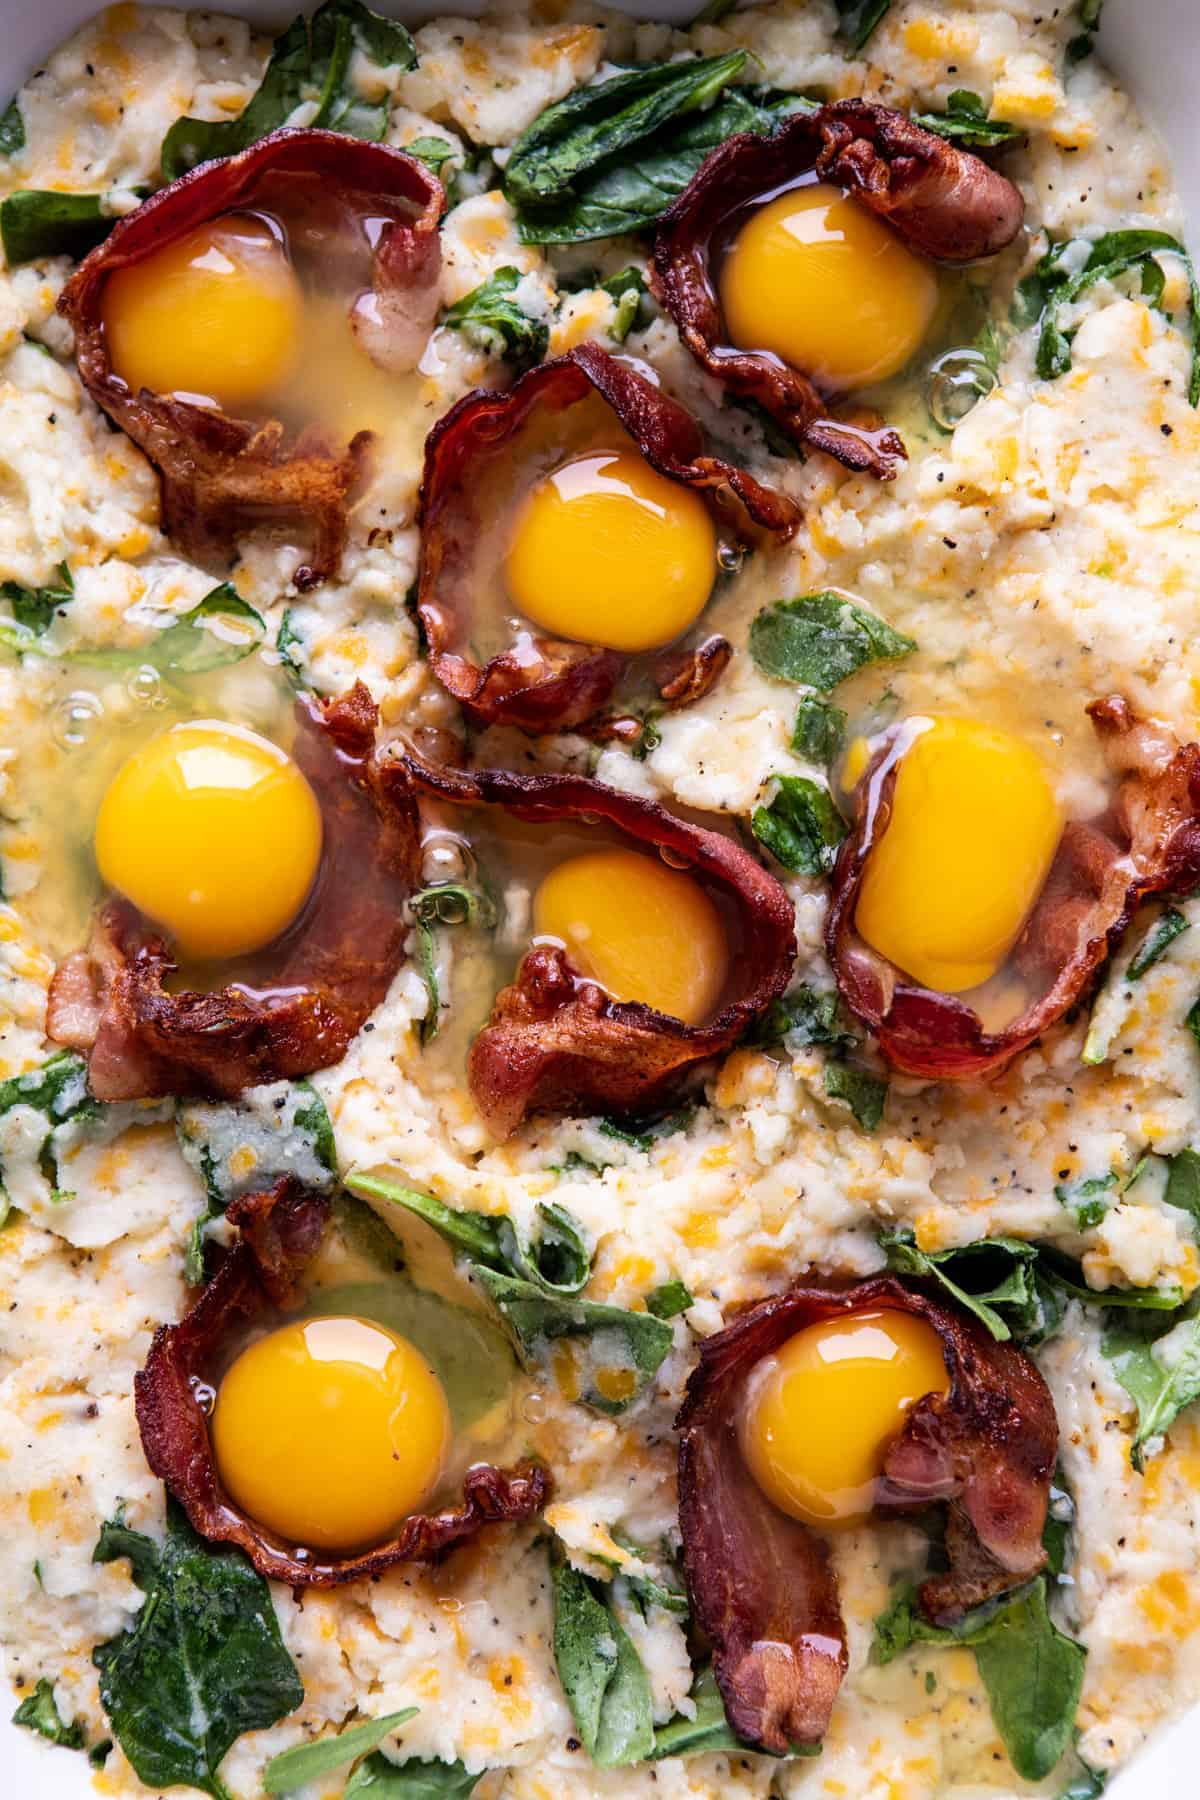 Everything Cheesy Potato and Egg Breakfast Casserole | halfbakedharvest.com #breakfast #brunch #eggs #bacon #easyrecipes